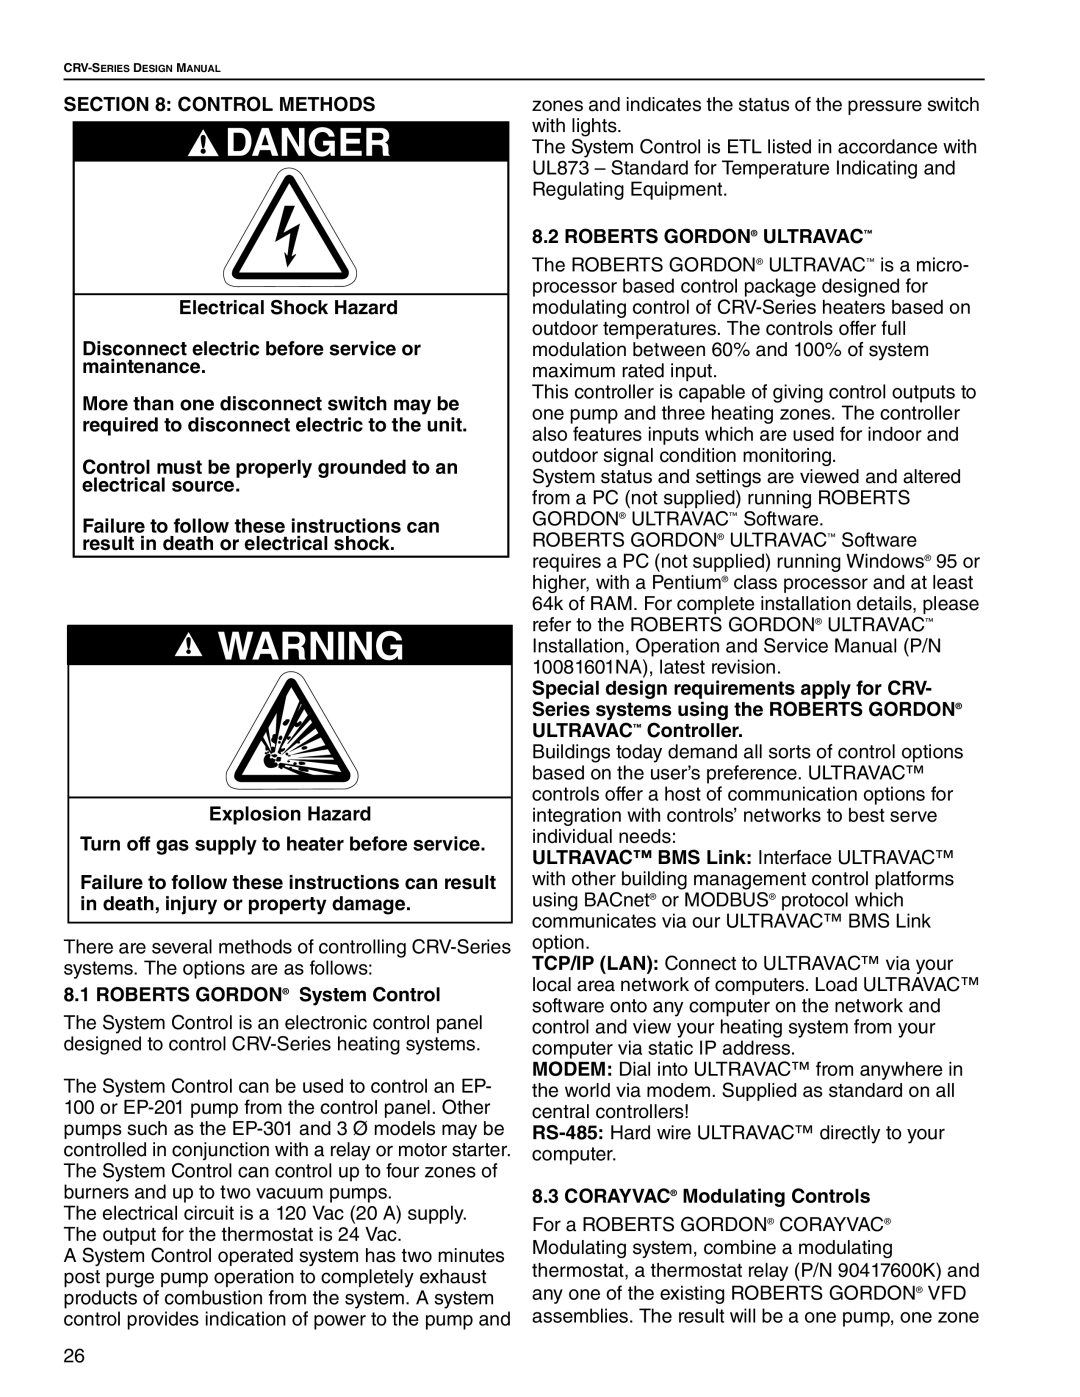 Roberts Gorden CRV-B-9 Control Methods, Electrical Shock Hazard, Disconnect electric before service or maintenance, Danger 